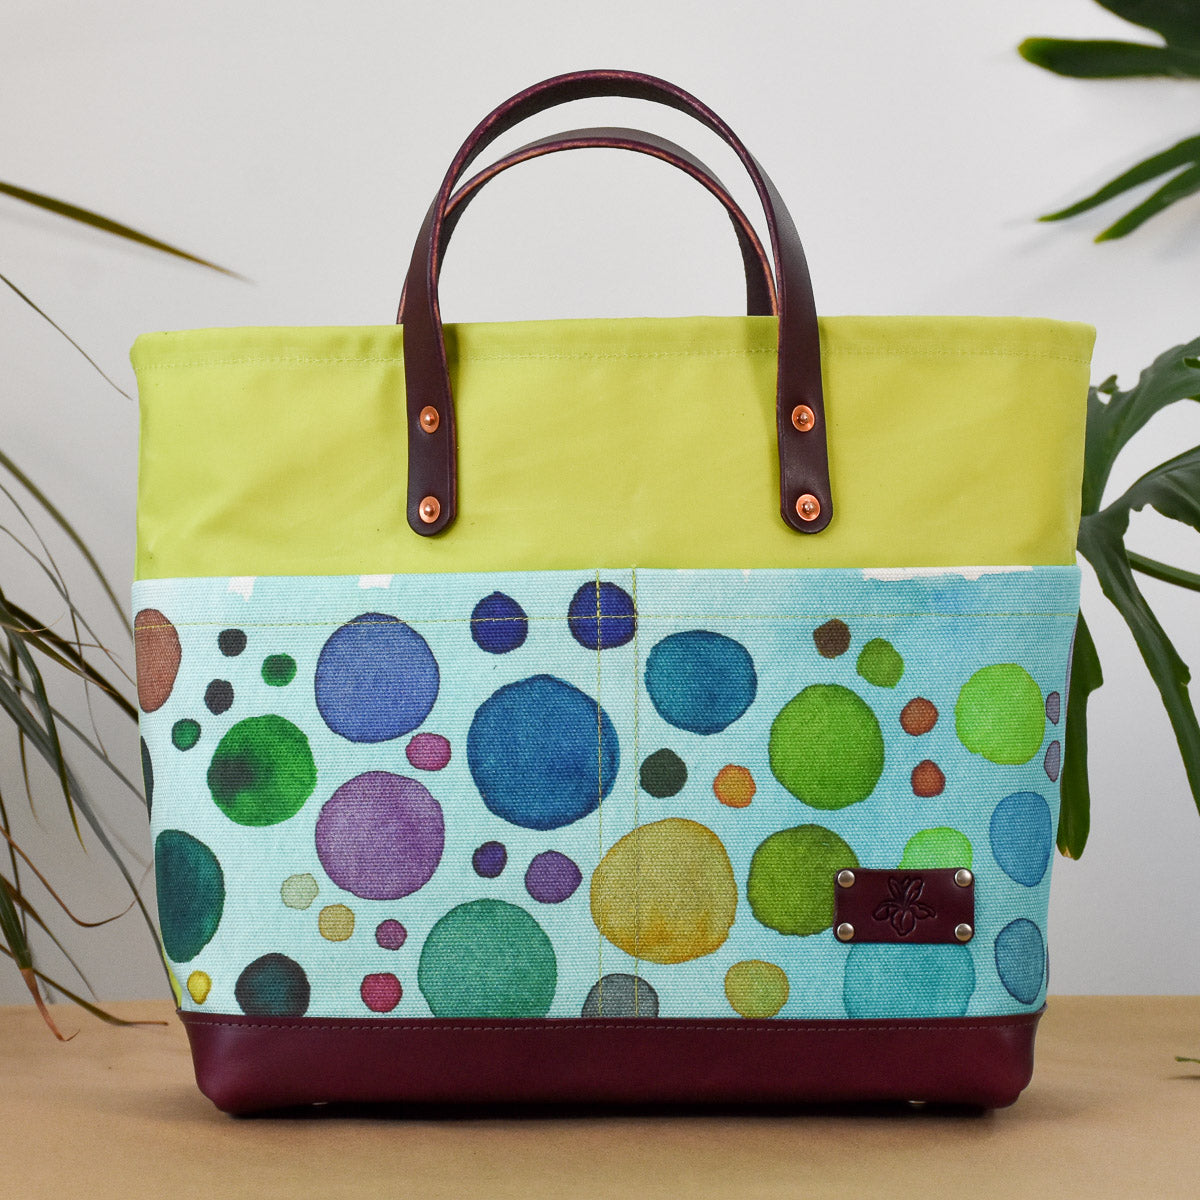 Kiwi with Turquoise Bubbles Bag No. 4 - The Market Bag